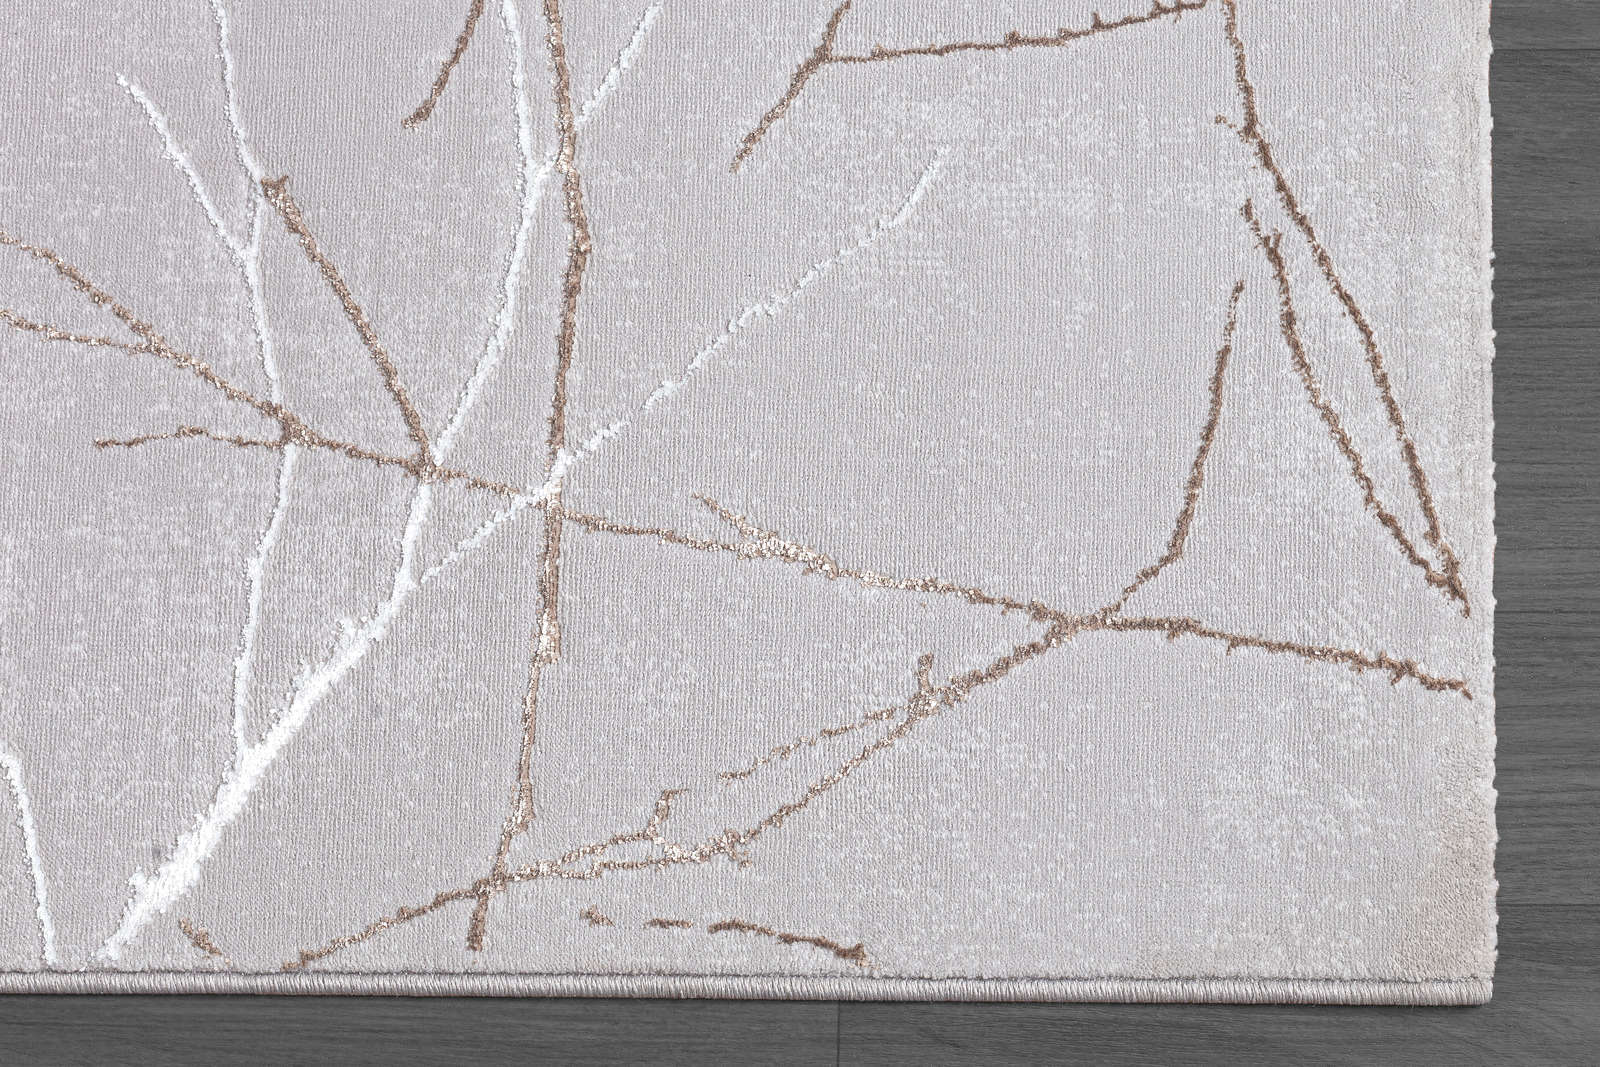             Bemusterter Hochflor Teppich in Grau – 200 x 140 cm
        